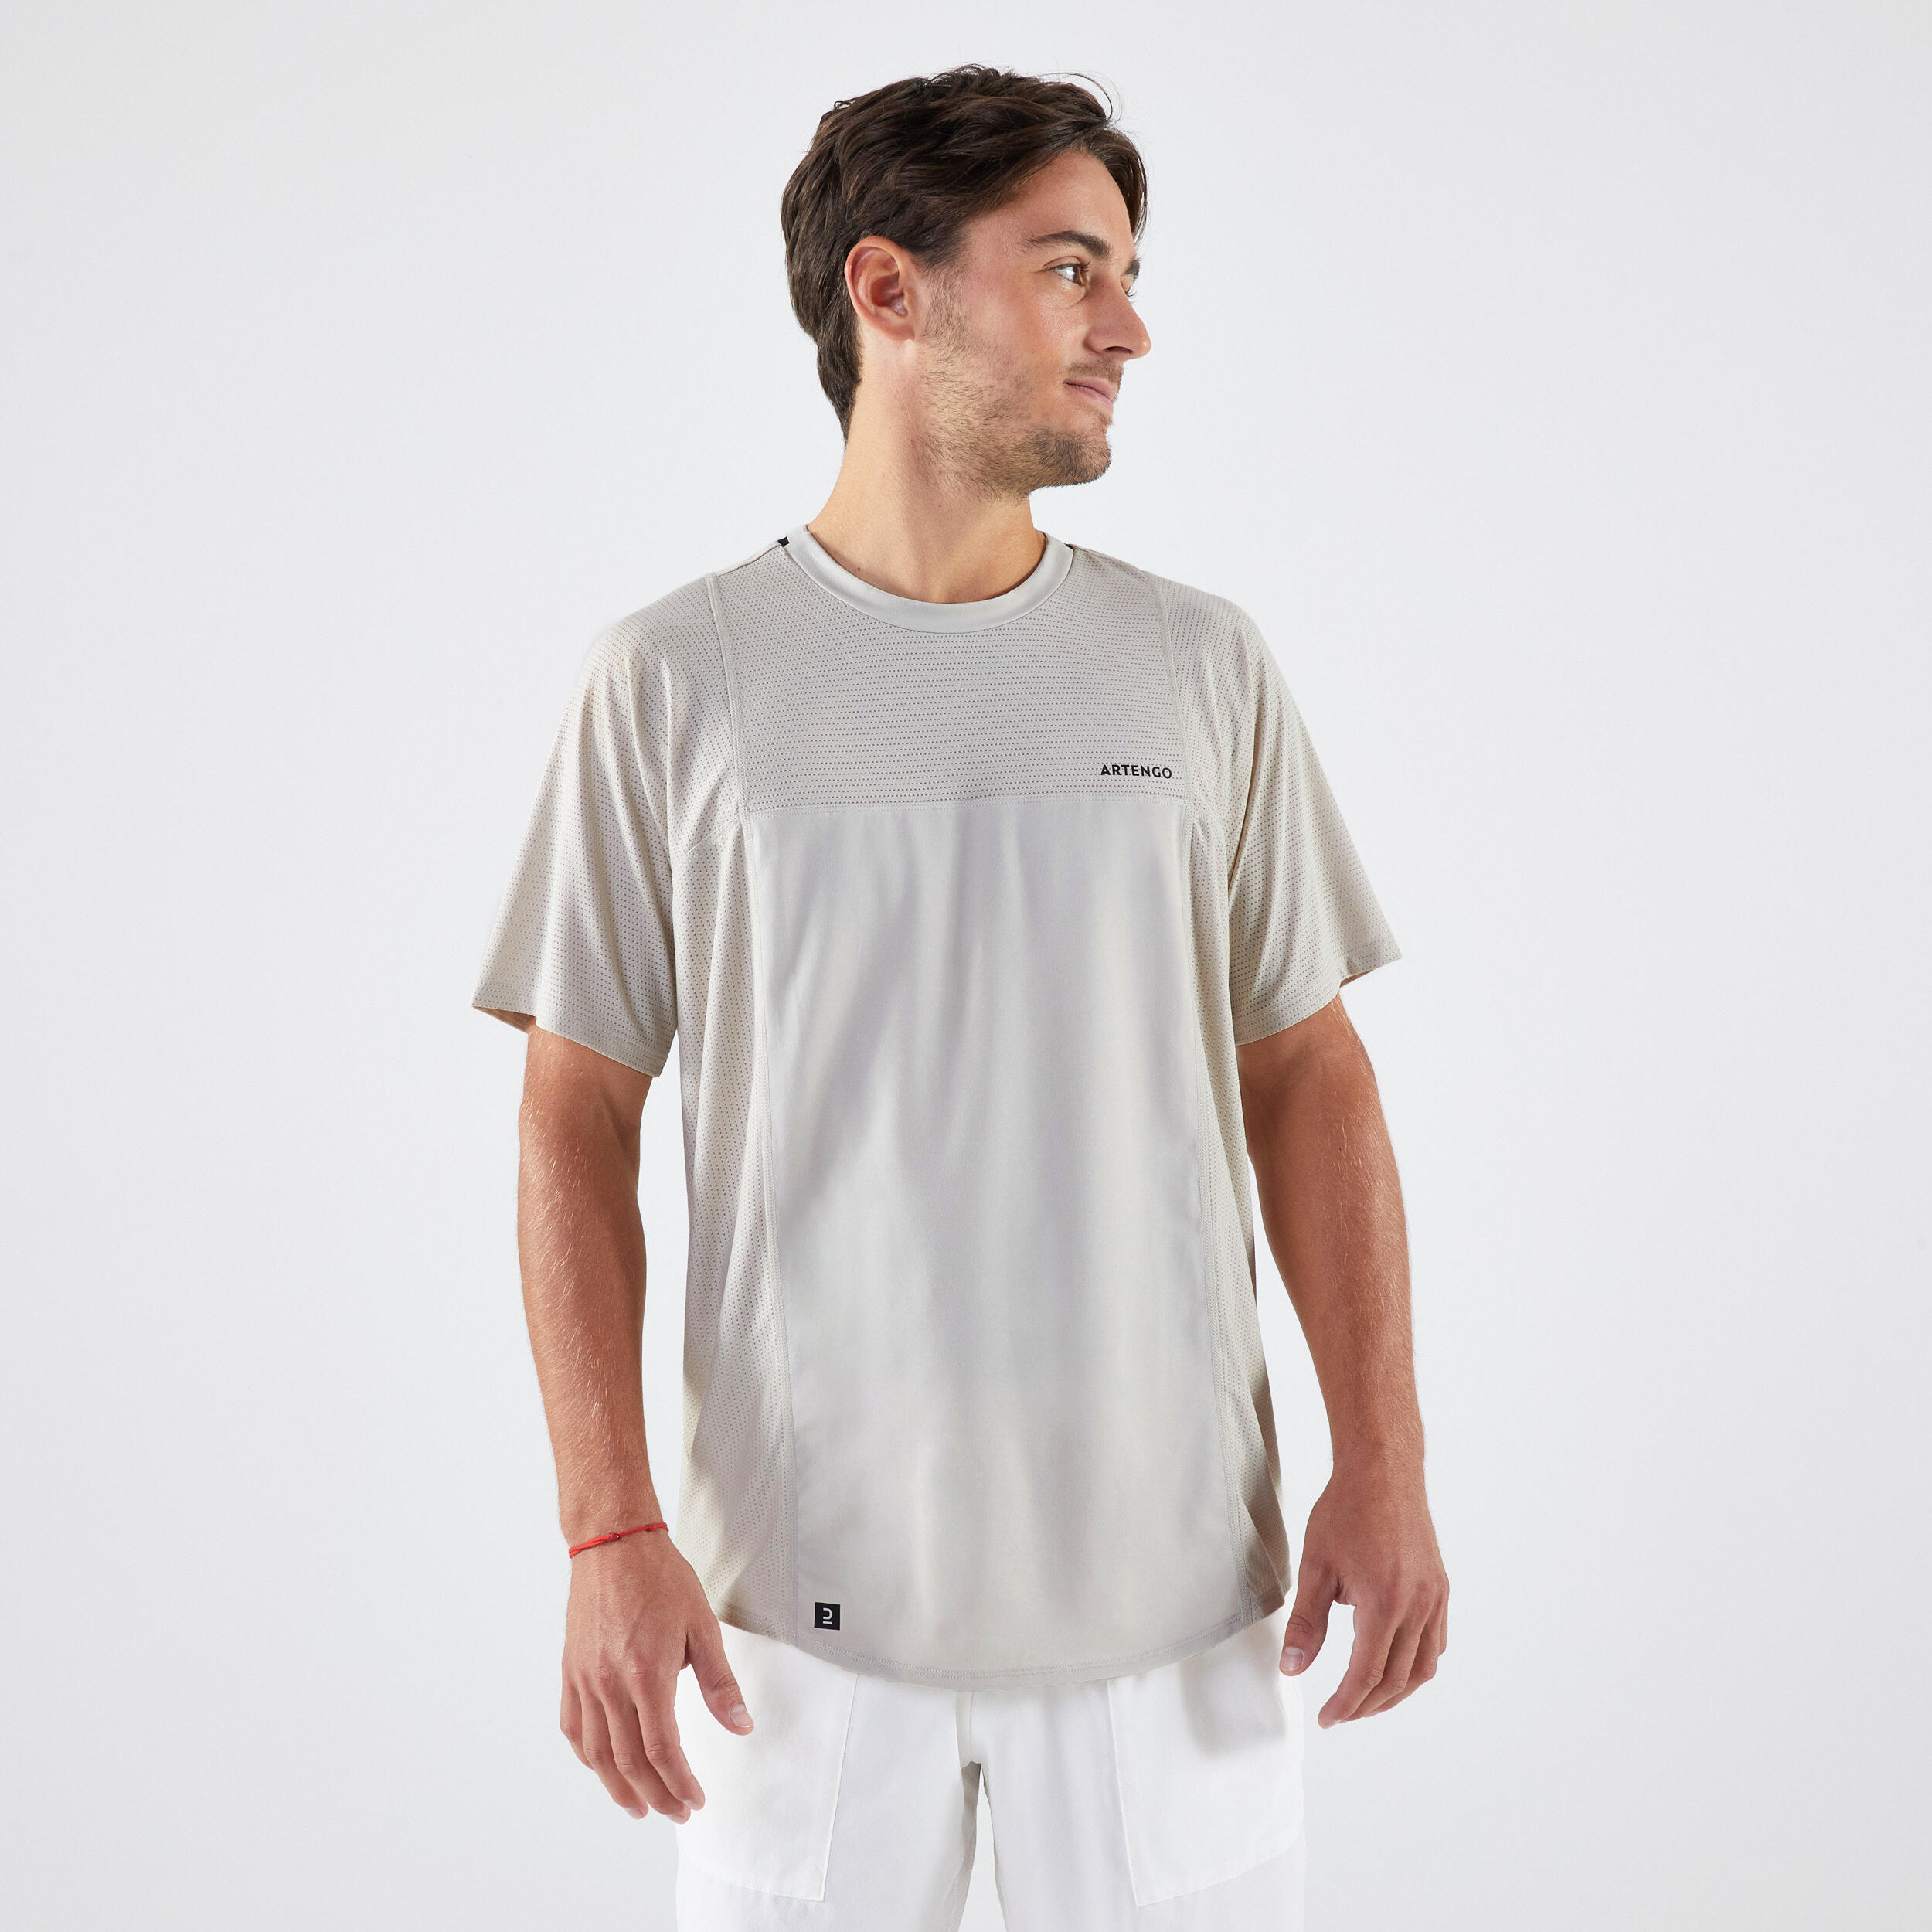 ARTENGO Men's Short-Sleeved Tennis T-Shirt Dry Gaël Monfils - Beige